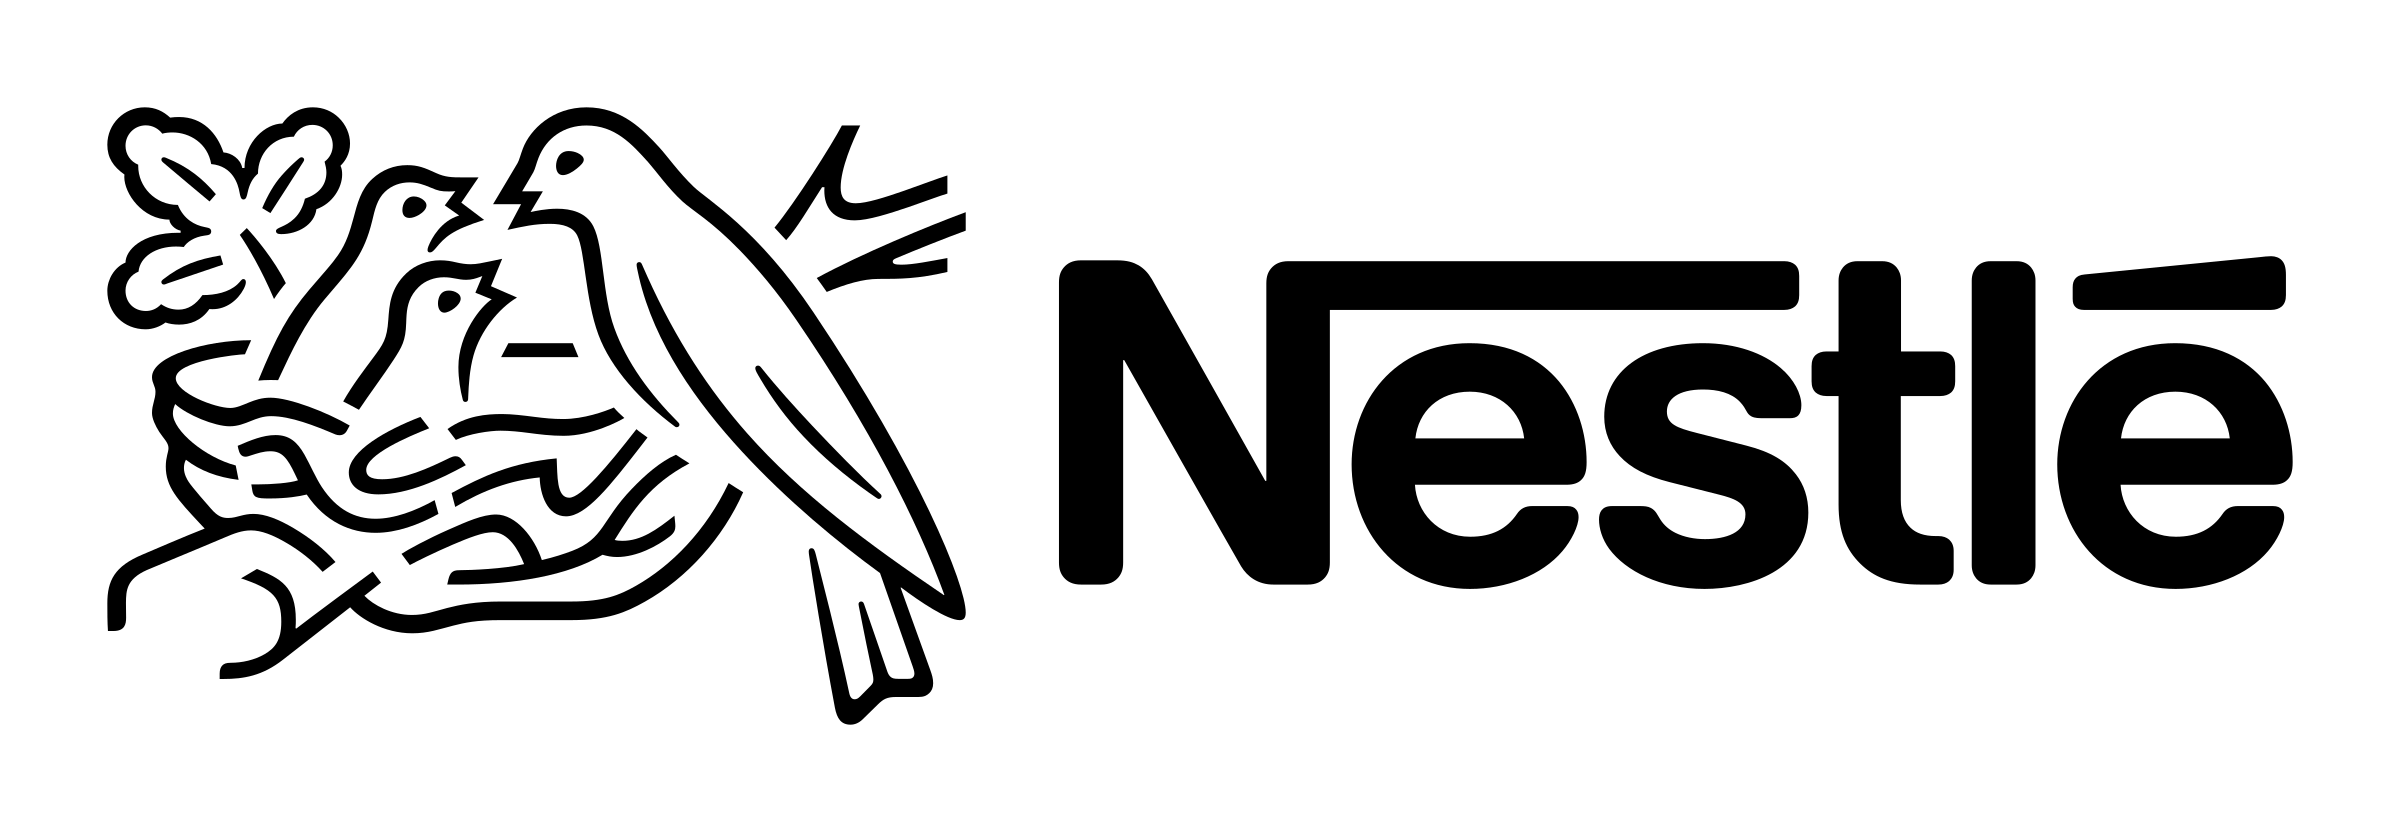 Nestle Logo PNG - 178568